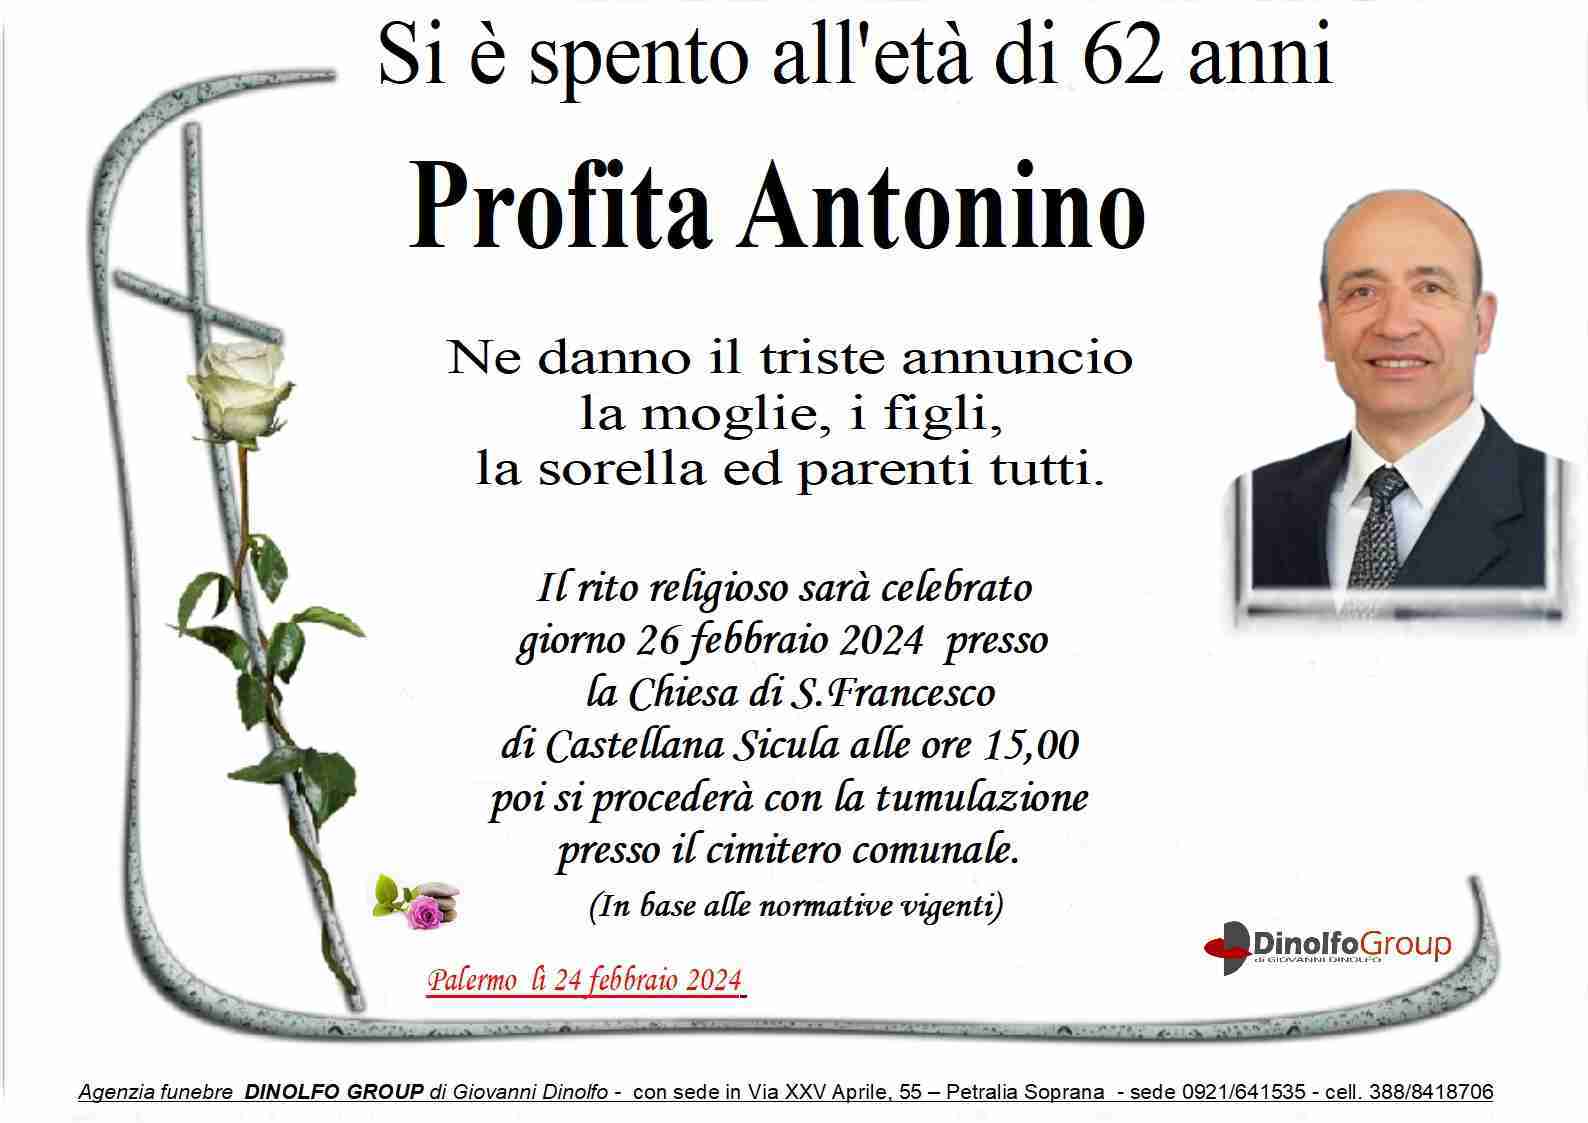 Antonino Profita